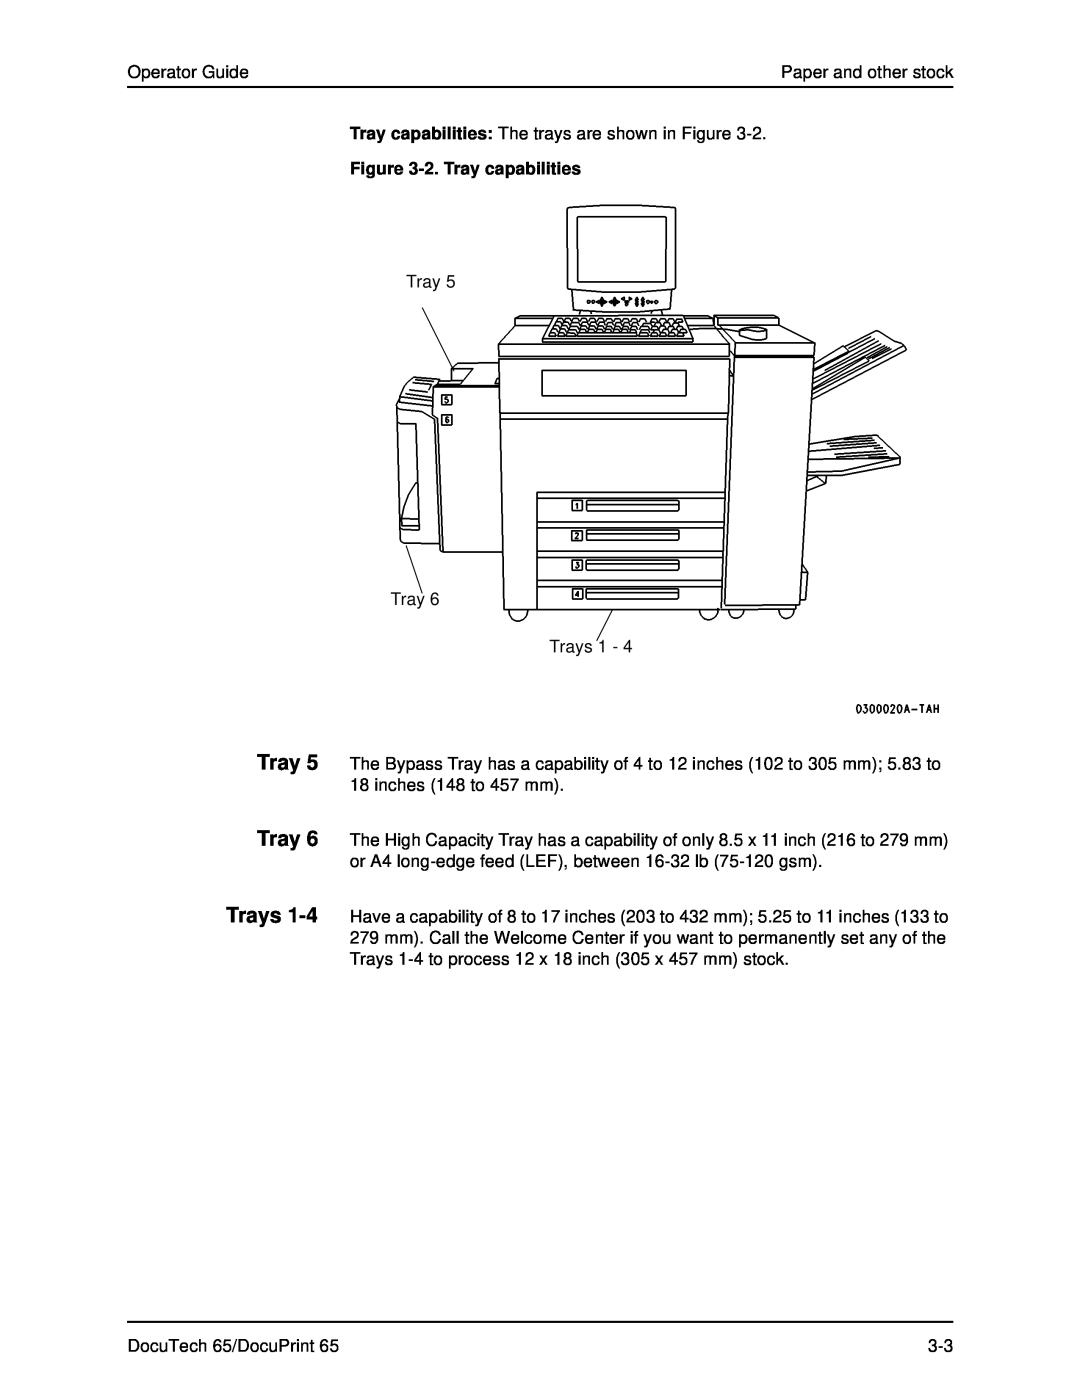 Xerox DOCUTECH 65 manual 2. Tray capabilities 